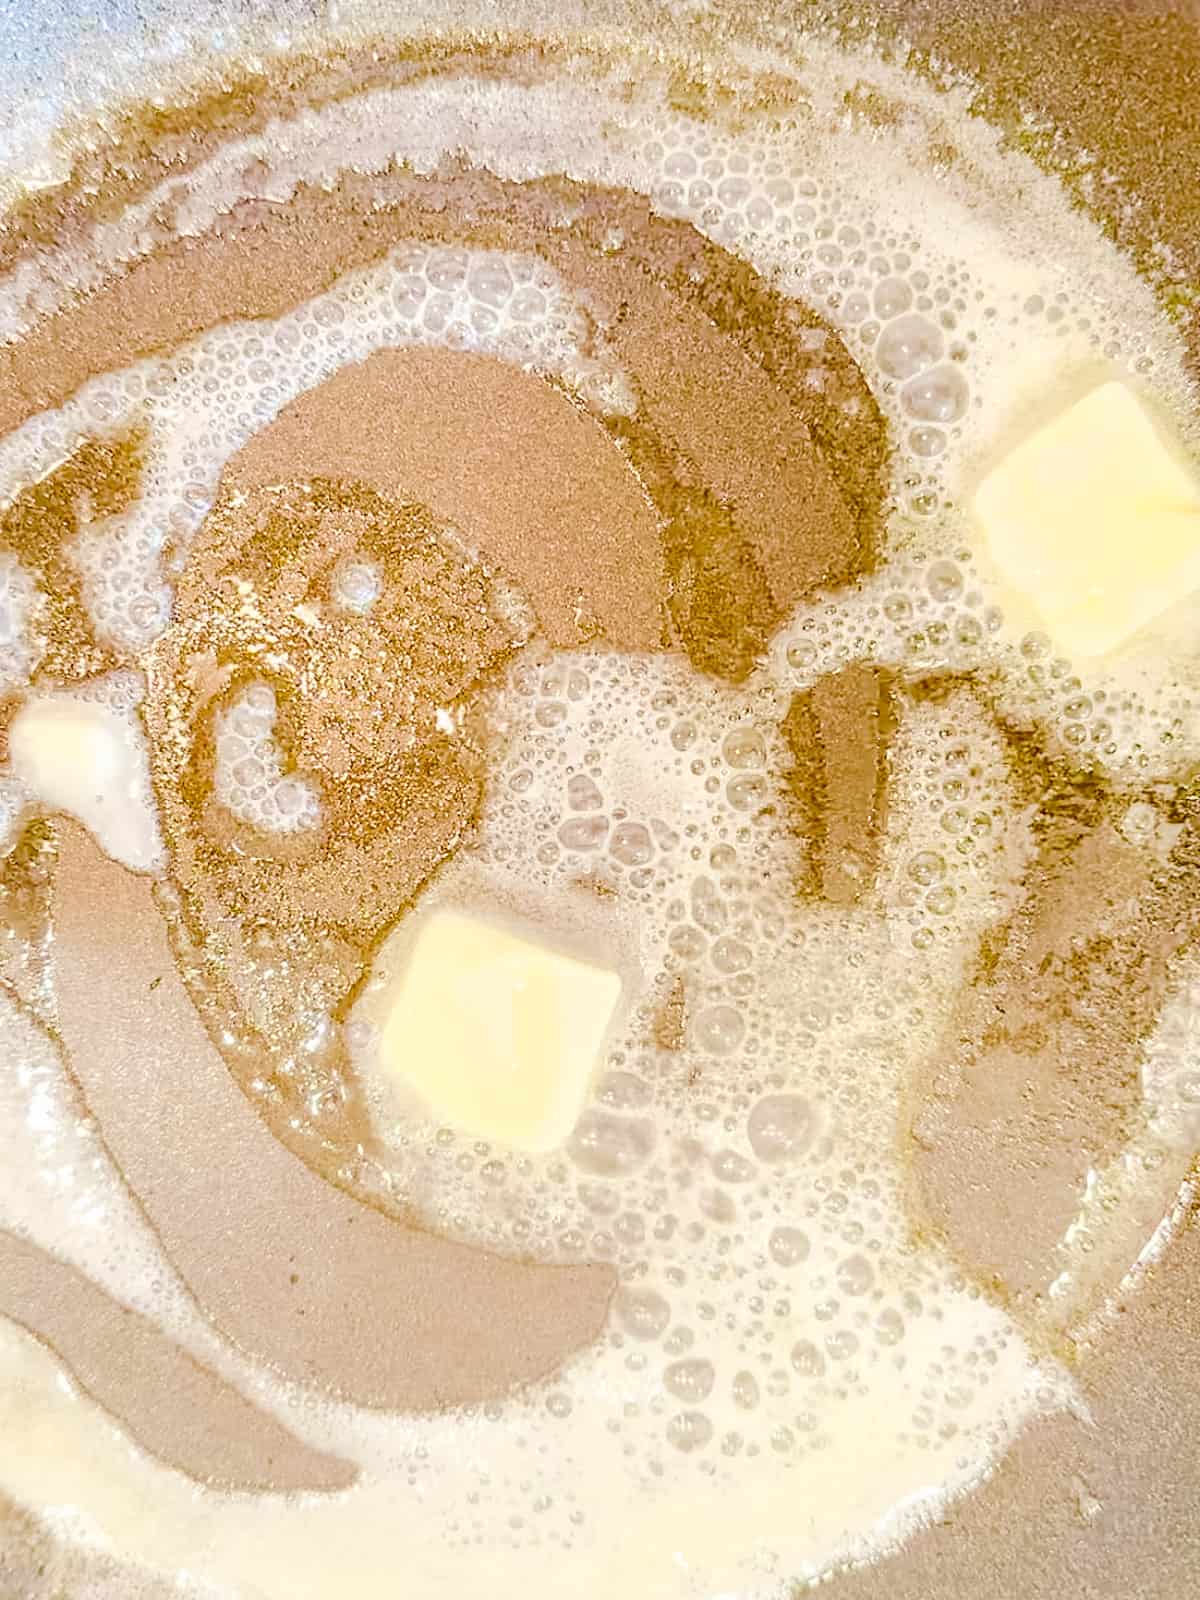 Melting butter in a nonstick pan.